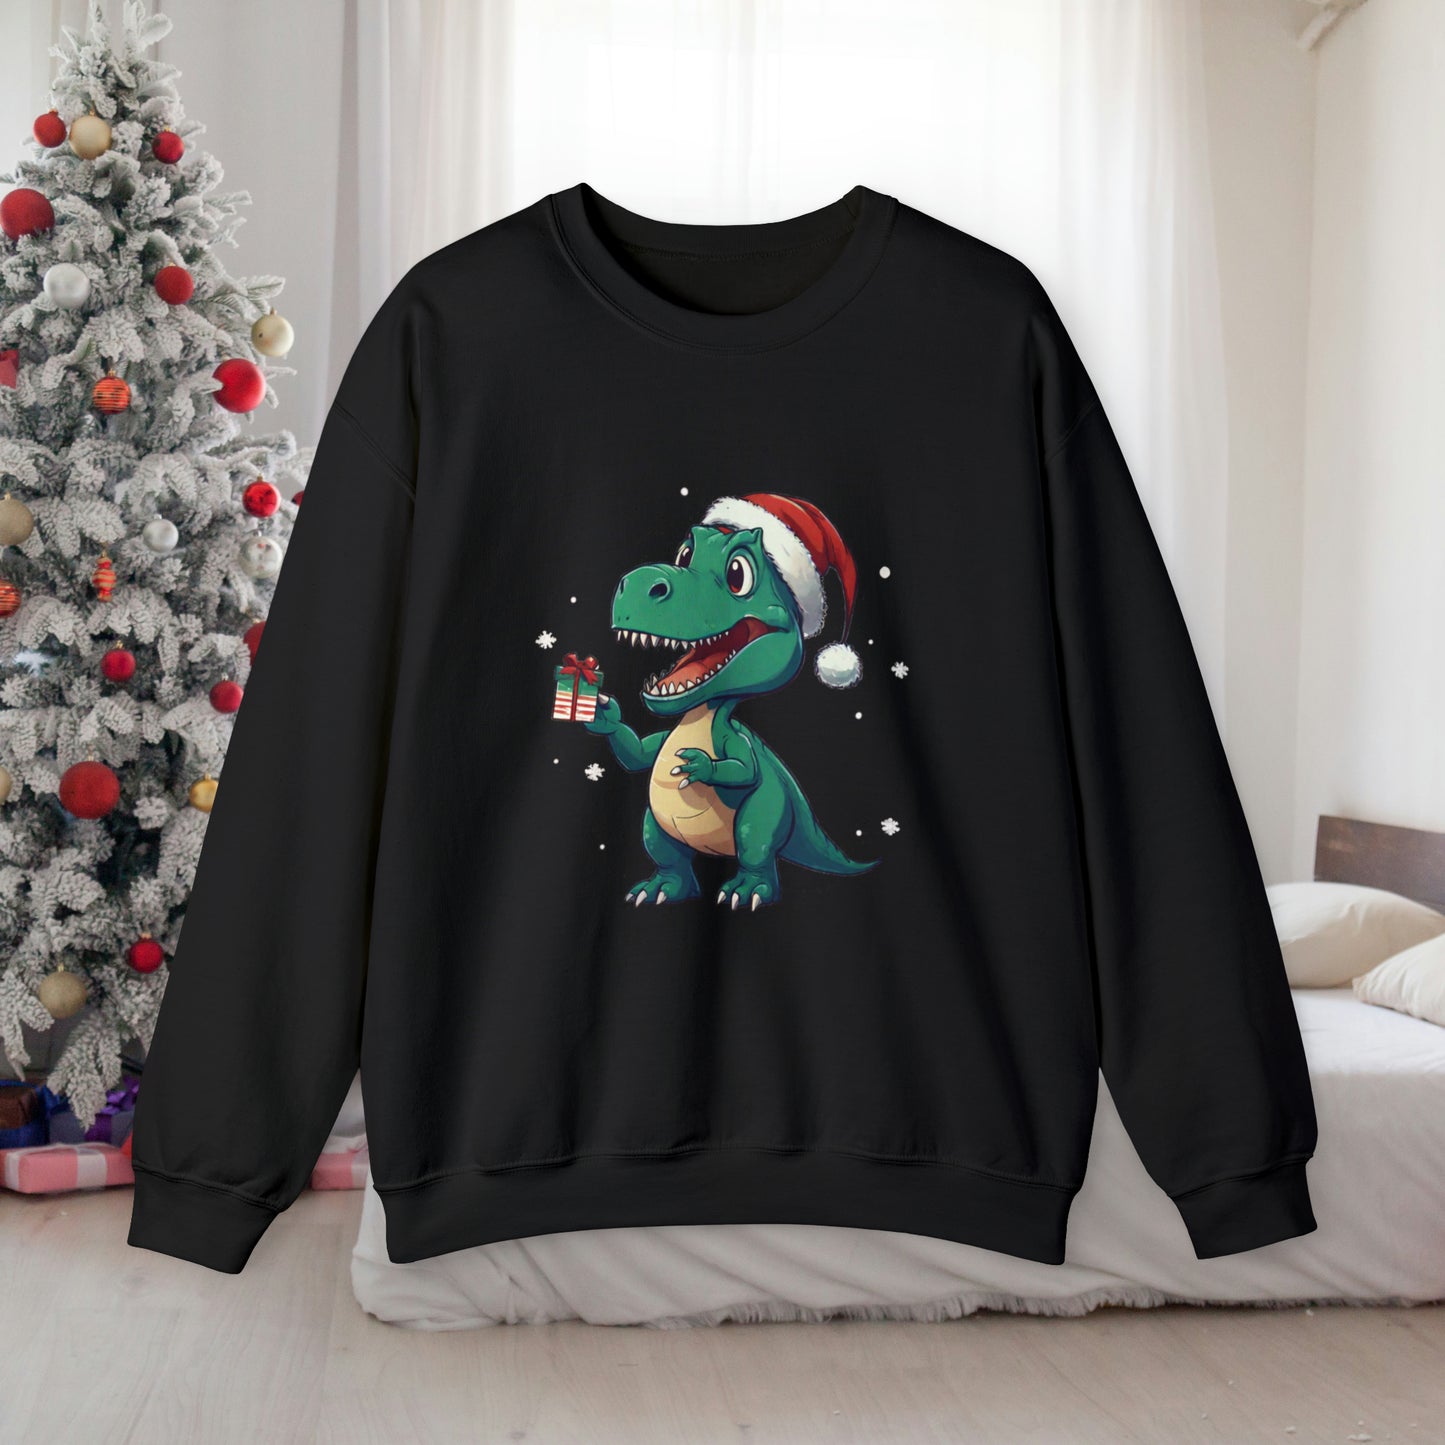 Black Christmas T-rex Sweatshirt with adorable Tirannosaurus Rex